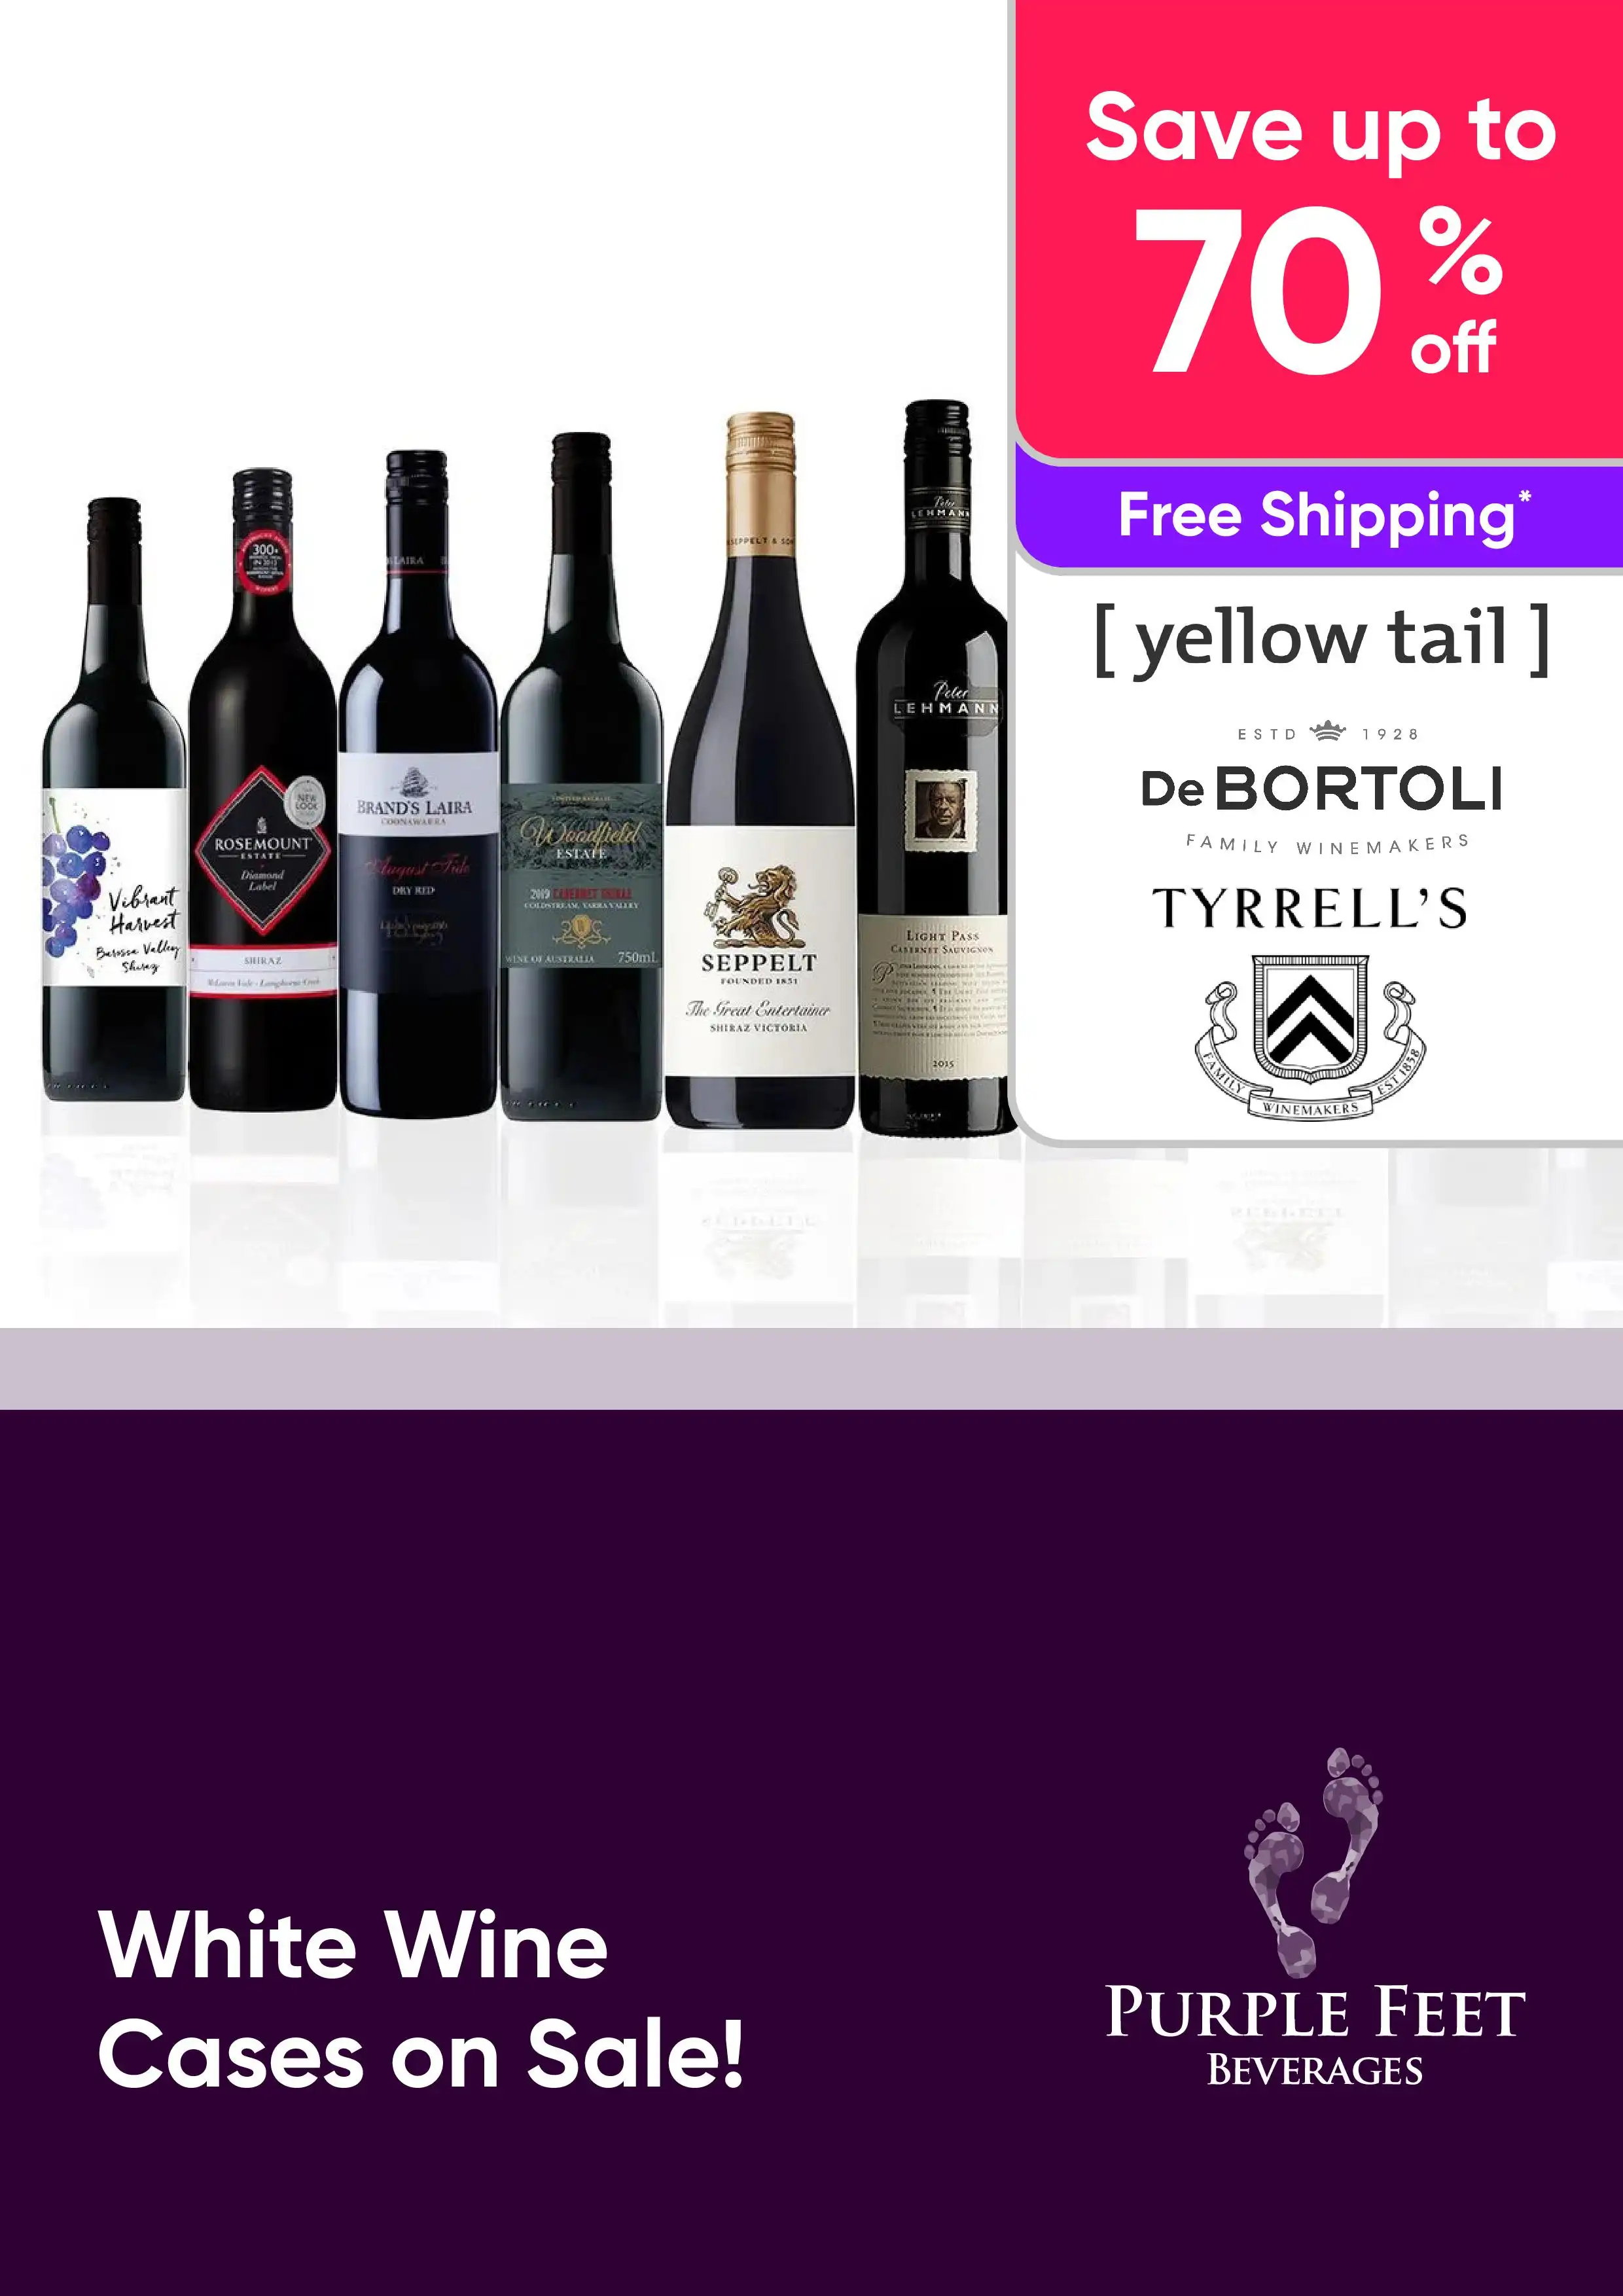 White Wine Cases on Sale! - Yellow Tail, De Bortoli, Tyrrell's - Save Up to 70%